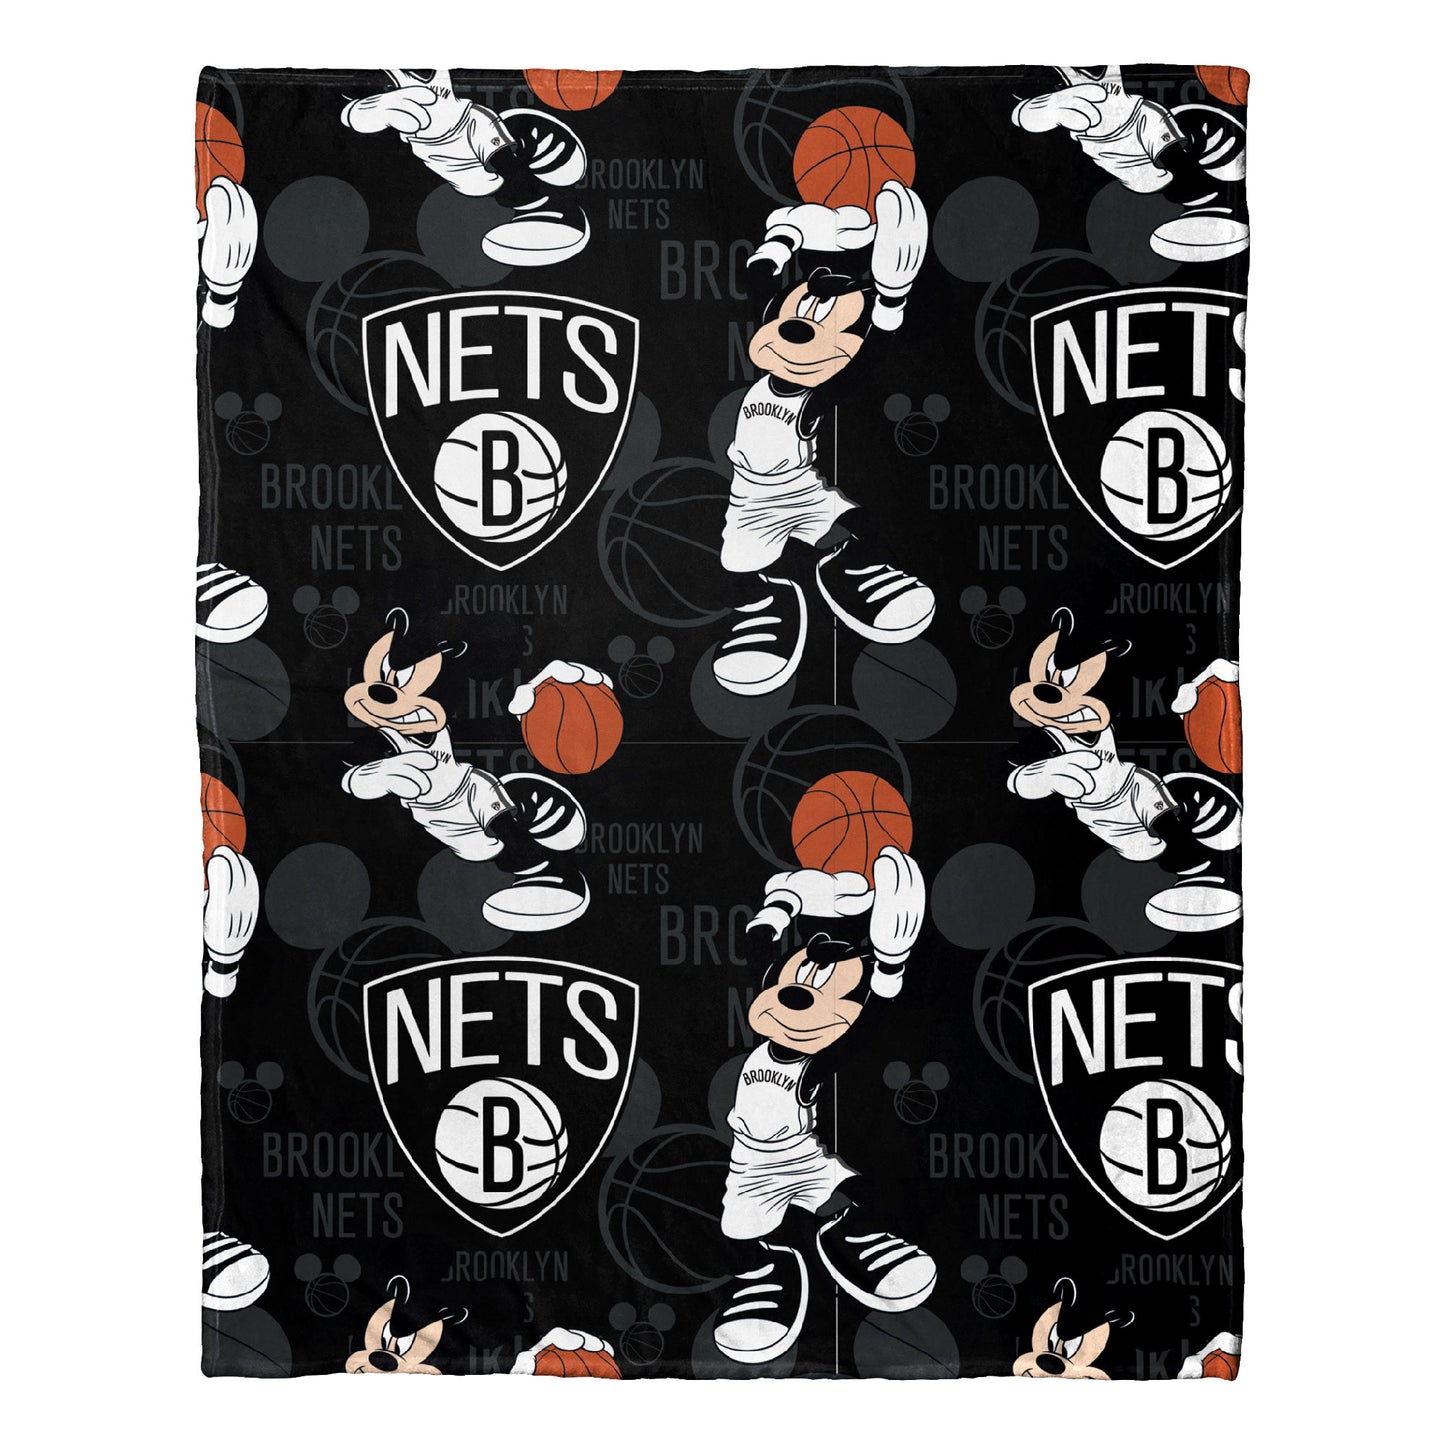 Nets OFFICIAL NBA & Disney's Mickey Mouse Character Hugger Pillow & Silk Touch Throw Set;  40" x 50"